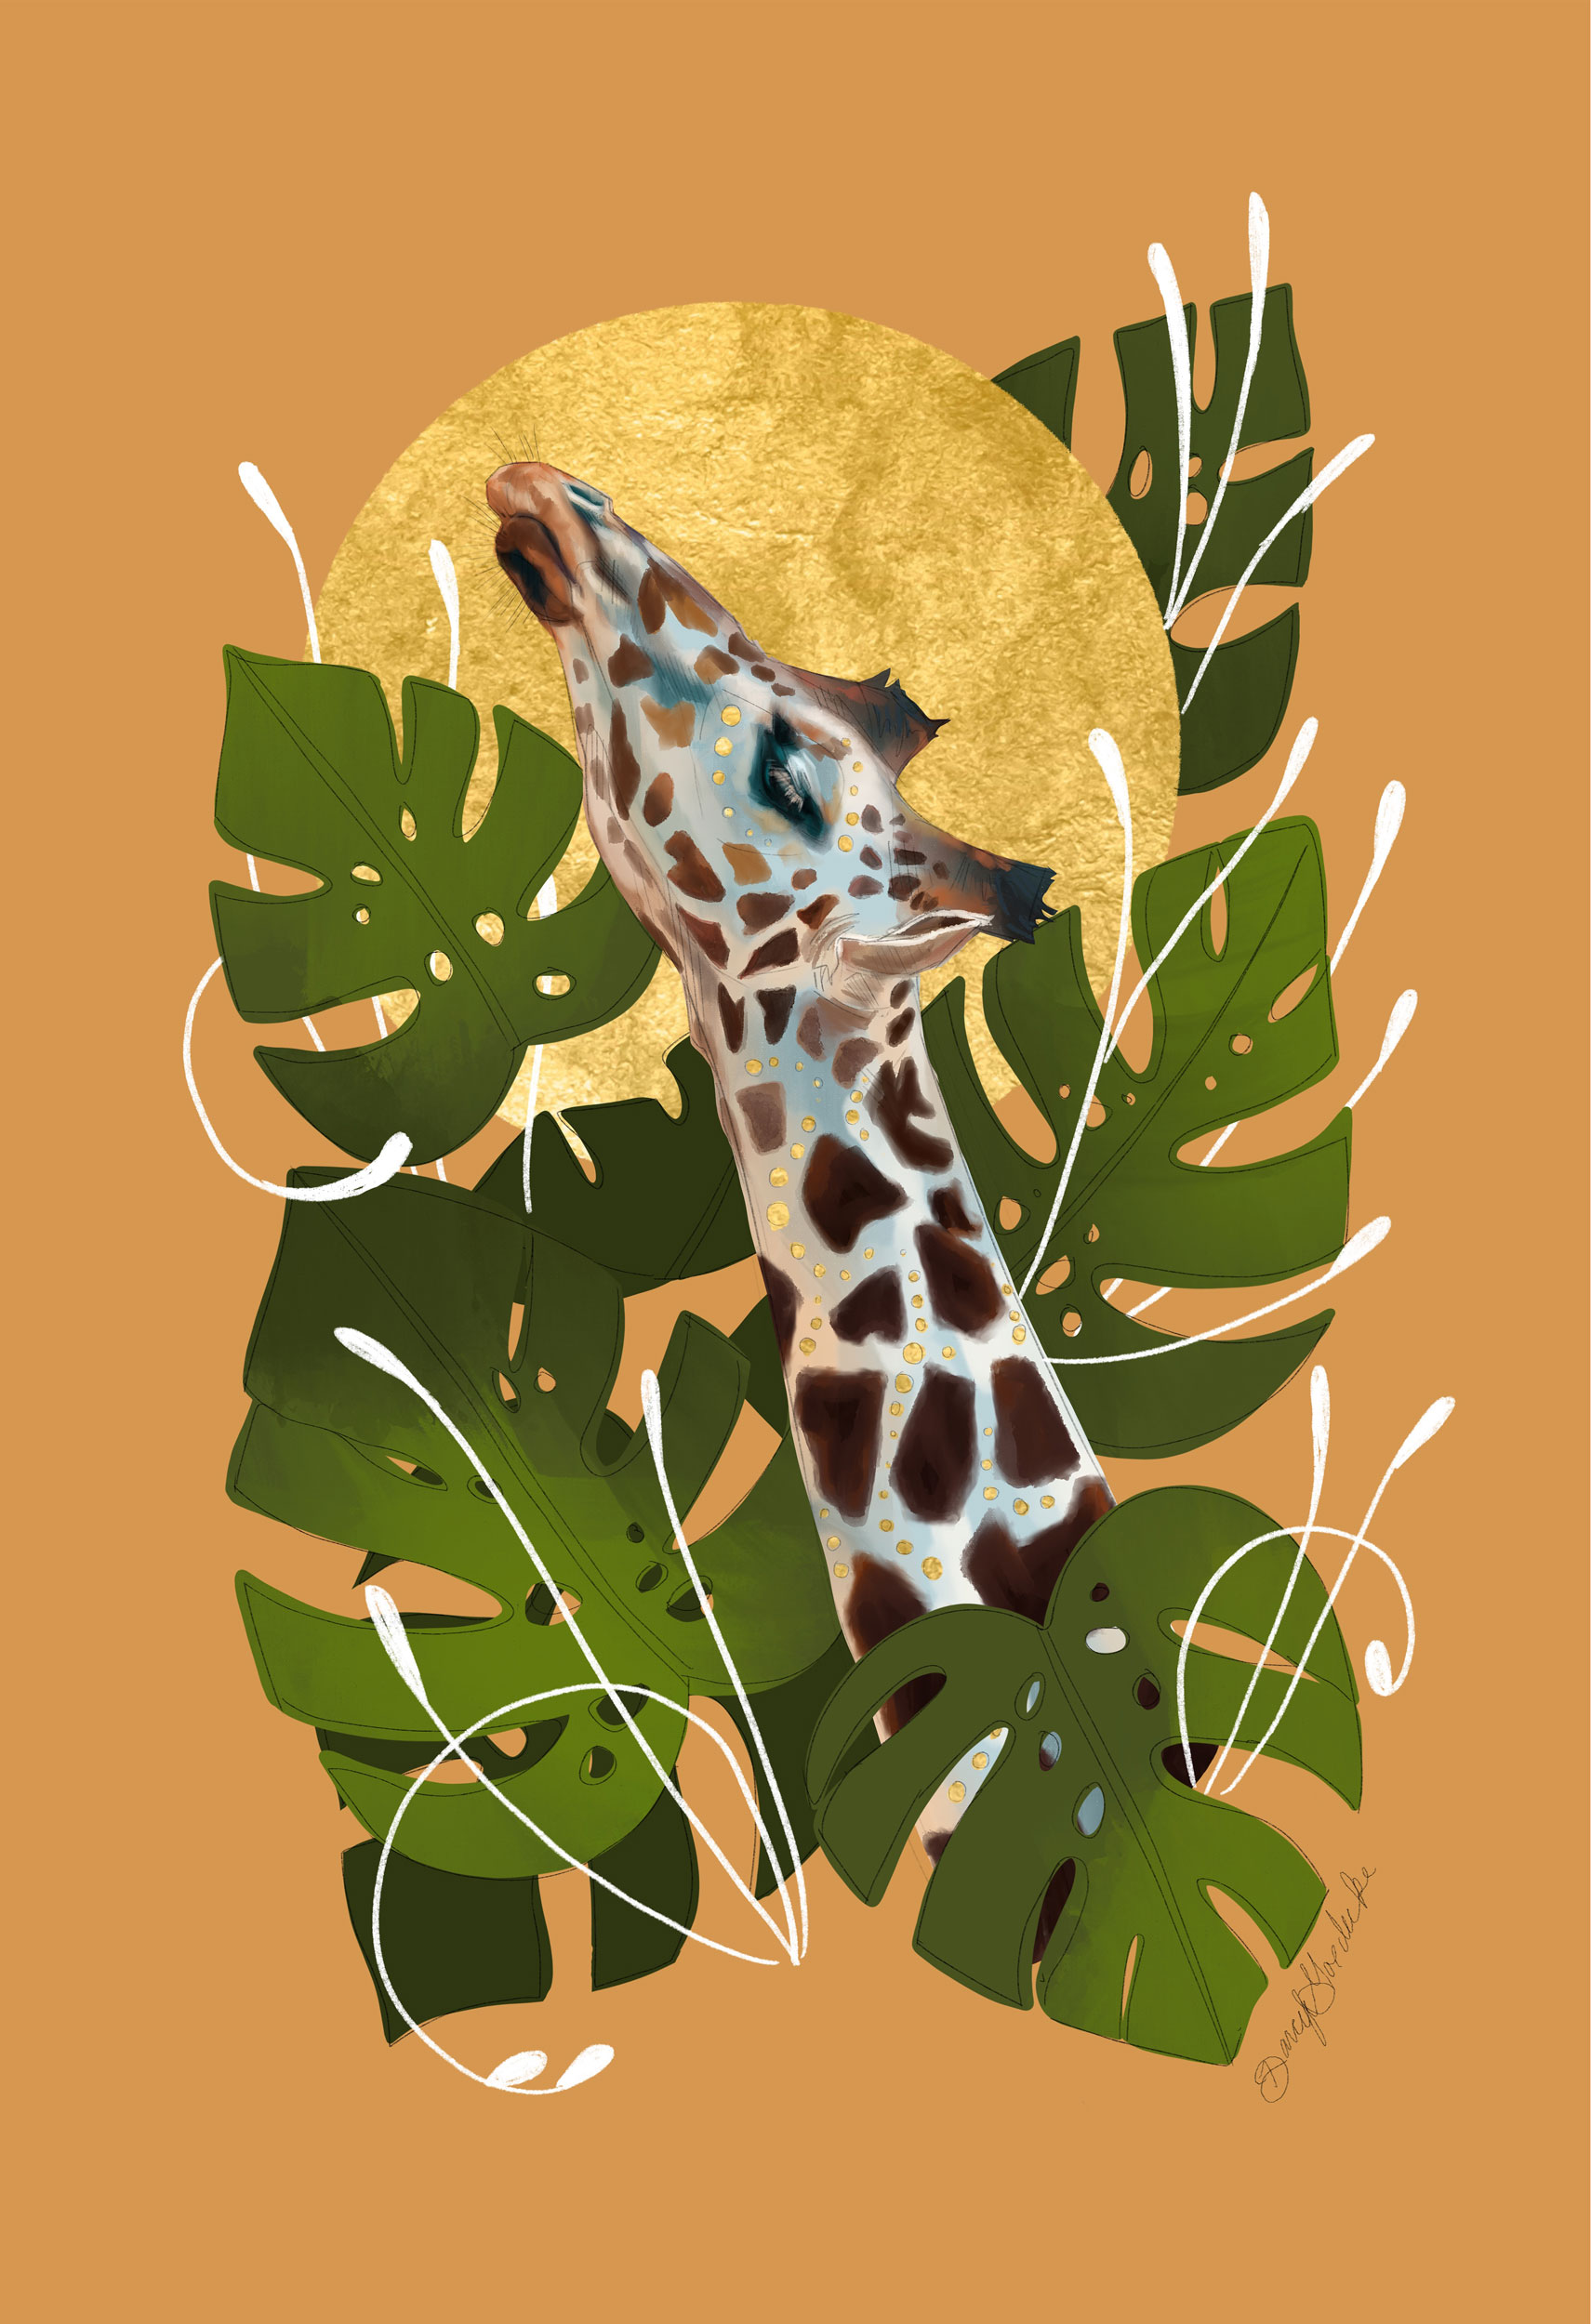 Giraffe by Darcy Goedecke